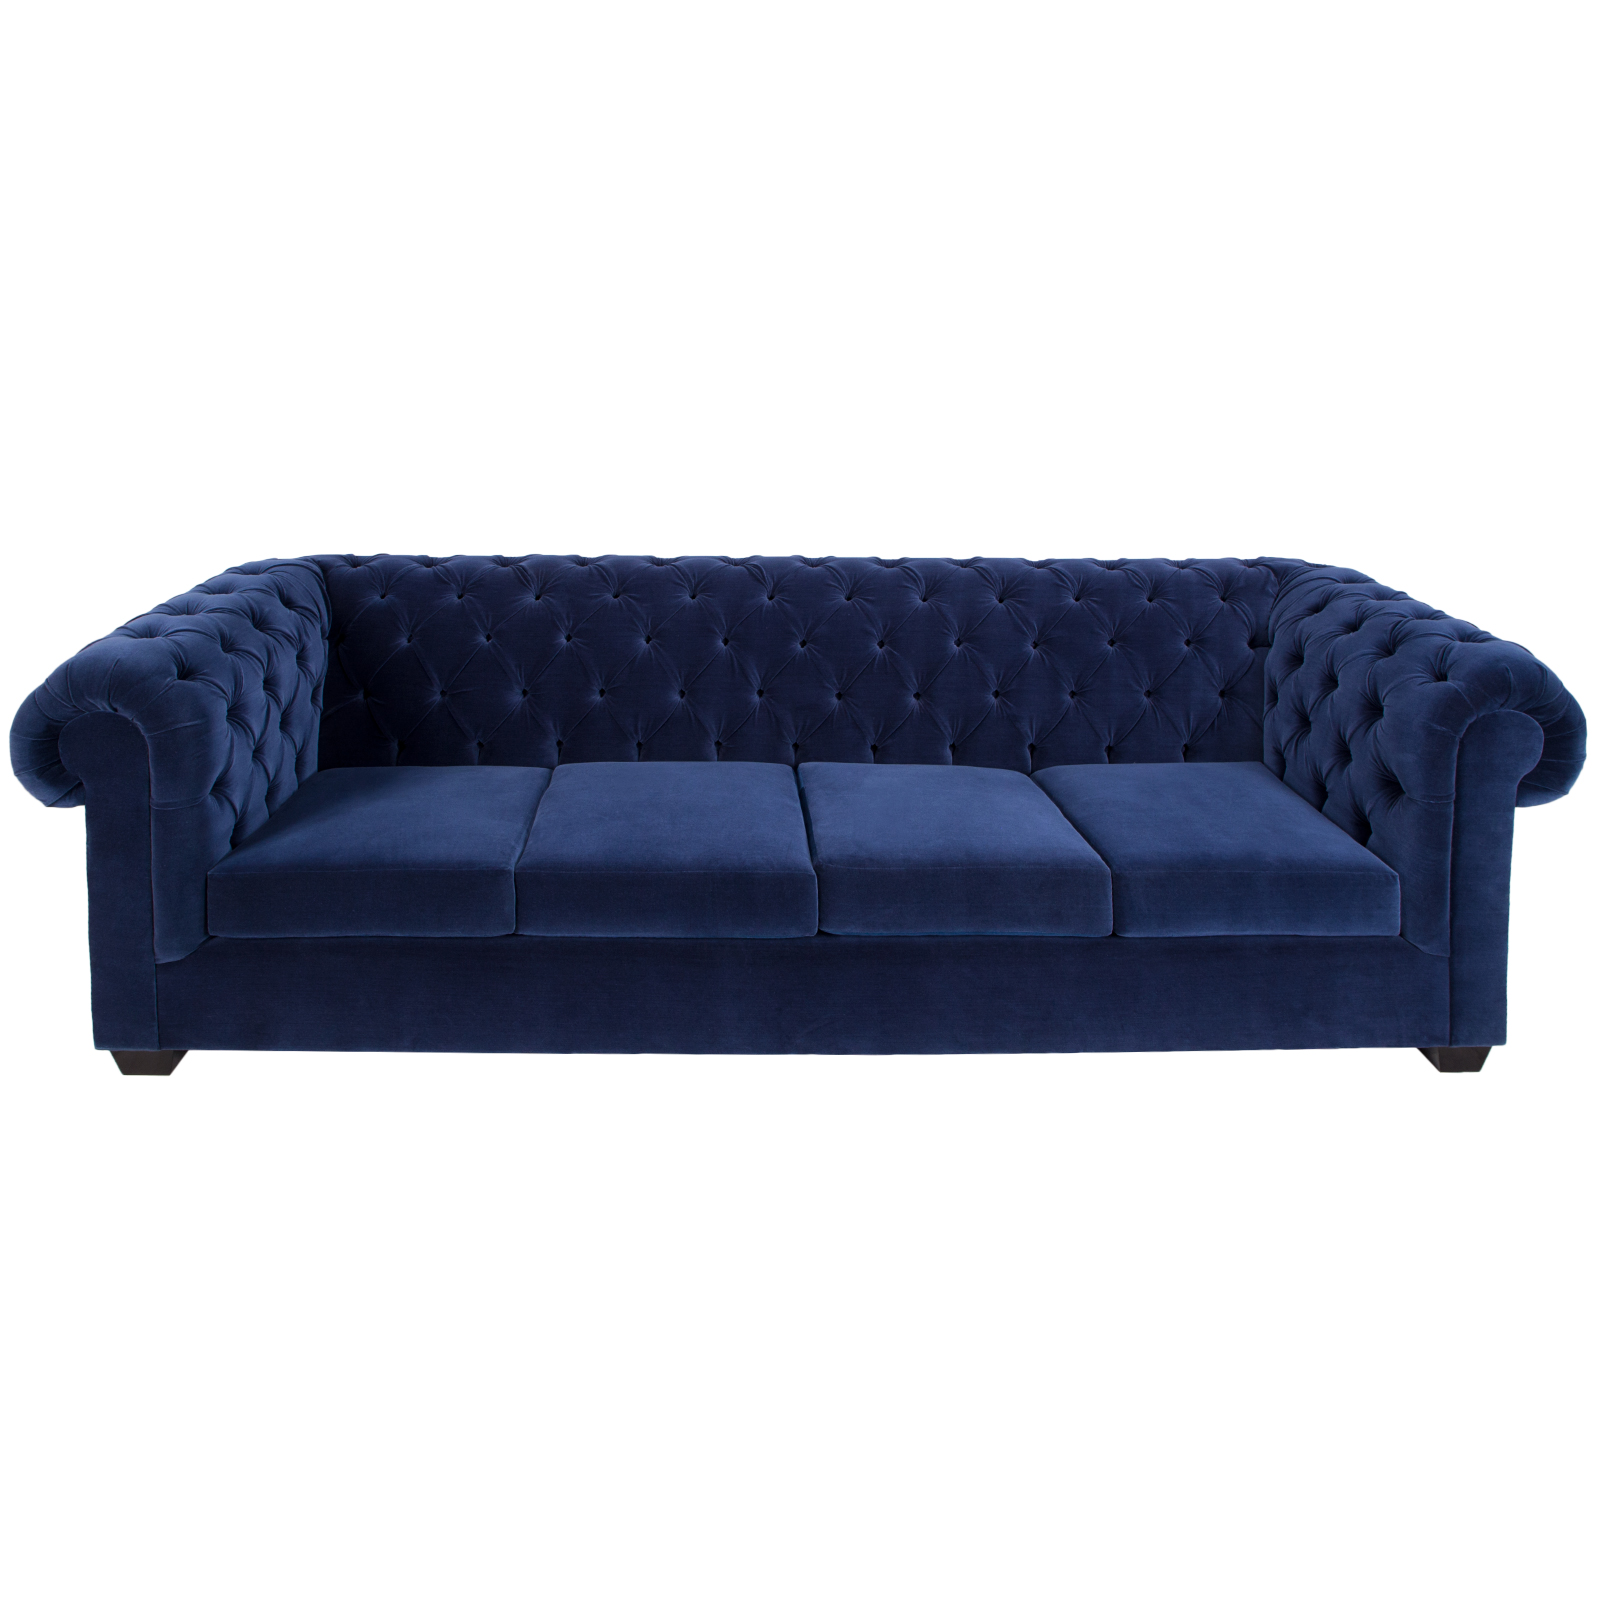 Blue Chesterfield Sofa Rentals | Event Furniture Rental